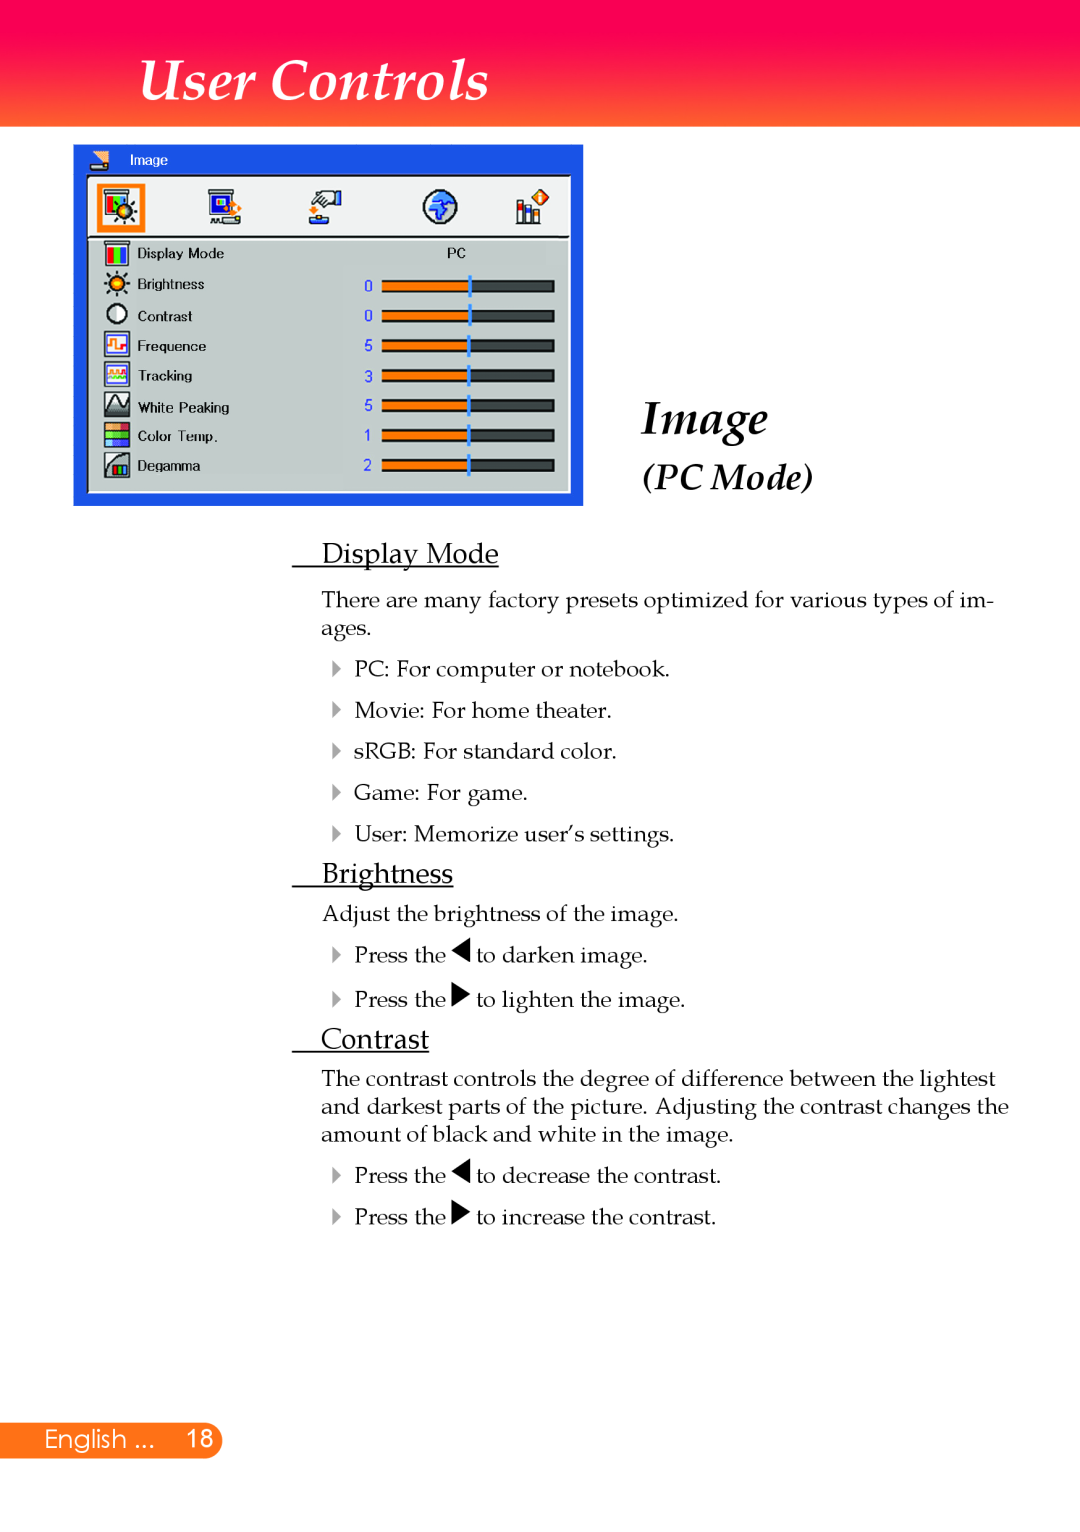 InFocus X7, X6 manual Image, PC Mode, Display Mode, Brightness, Contrast, User Controls, English 